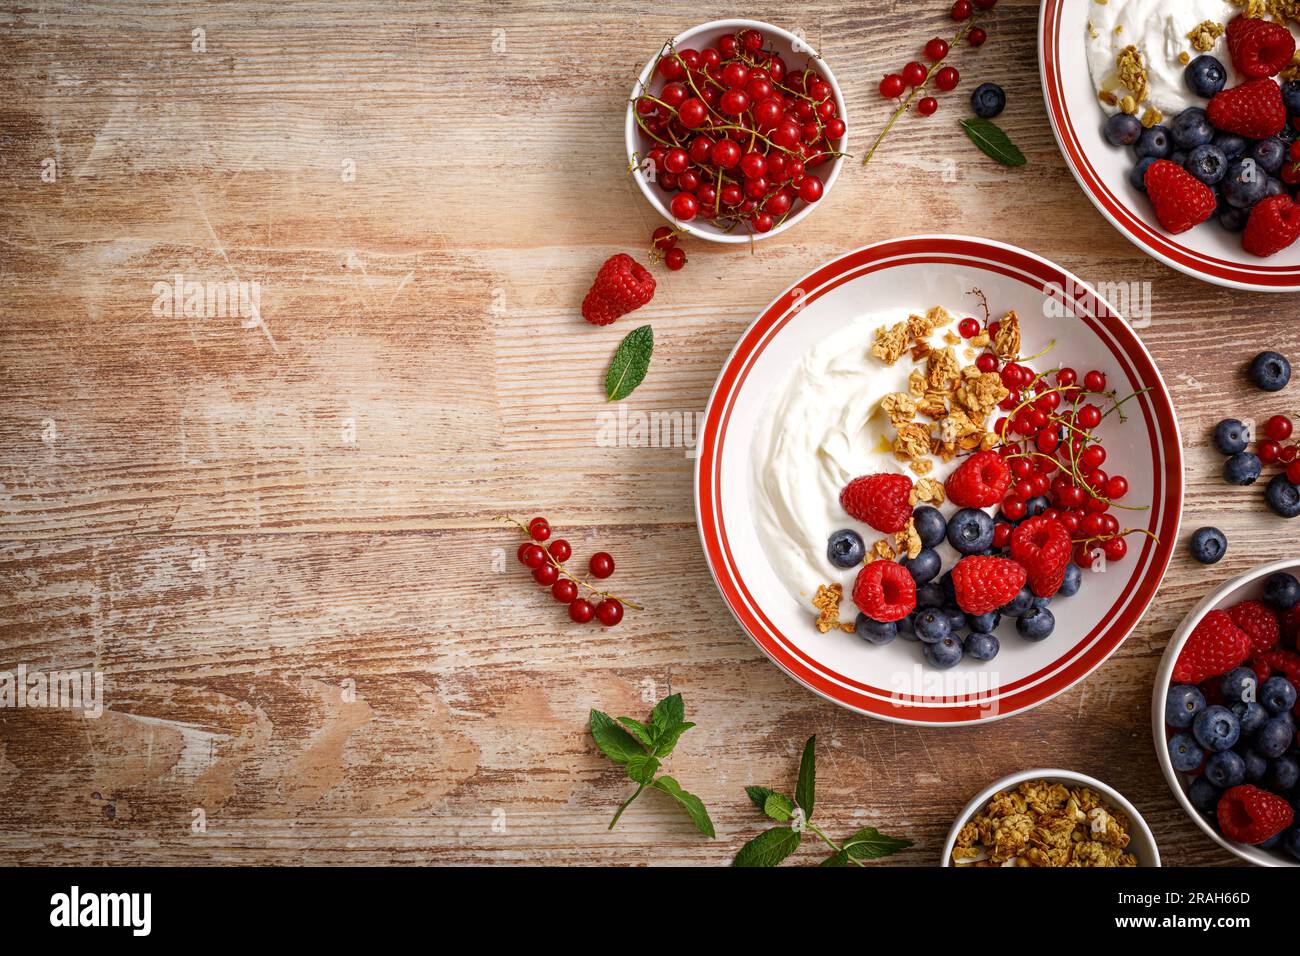 Yogurt with berries on wooden background. White plain greek yogurt with fresh berries and granola, top view. Healthy food, breakfast menu Stock Photo